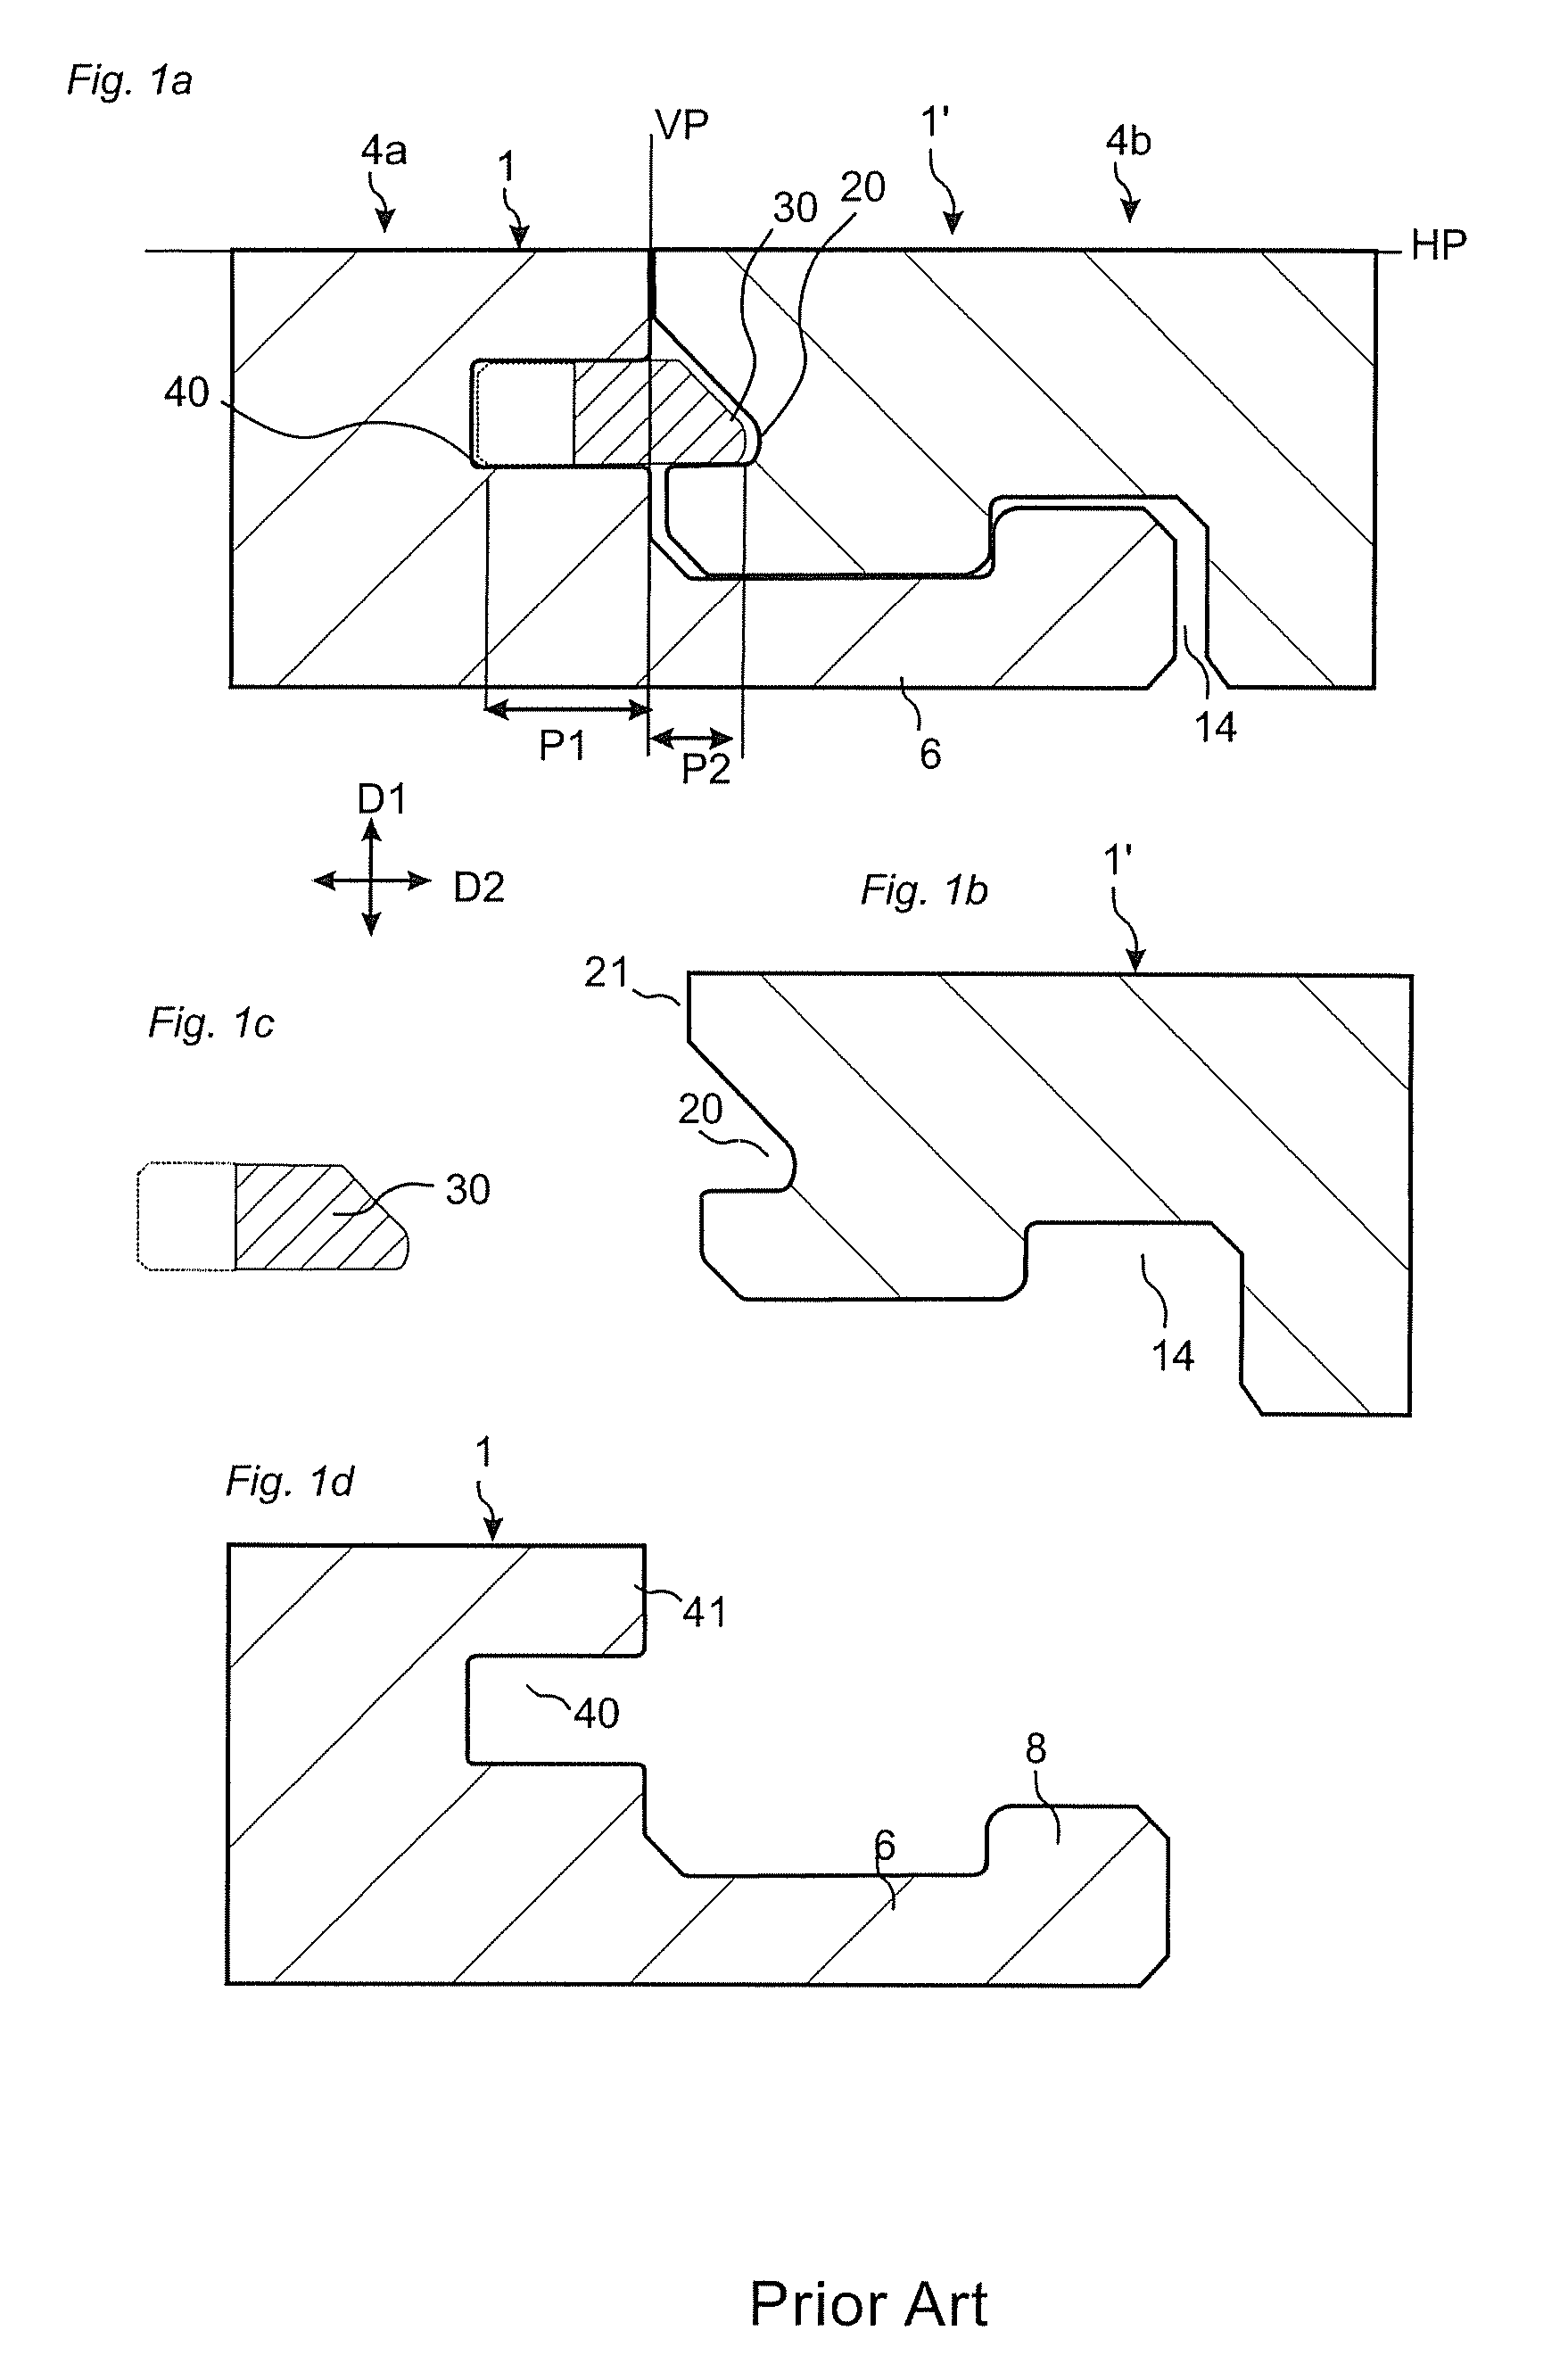 Mechanical Locking of Floor Panels